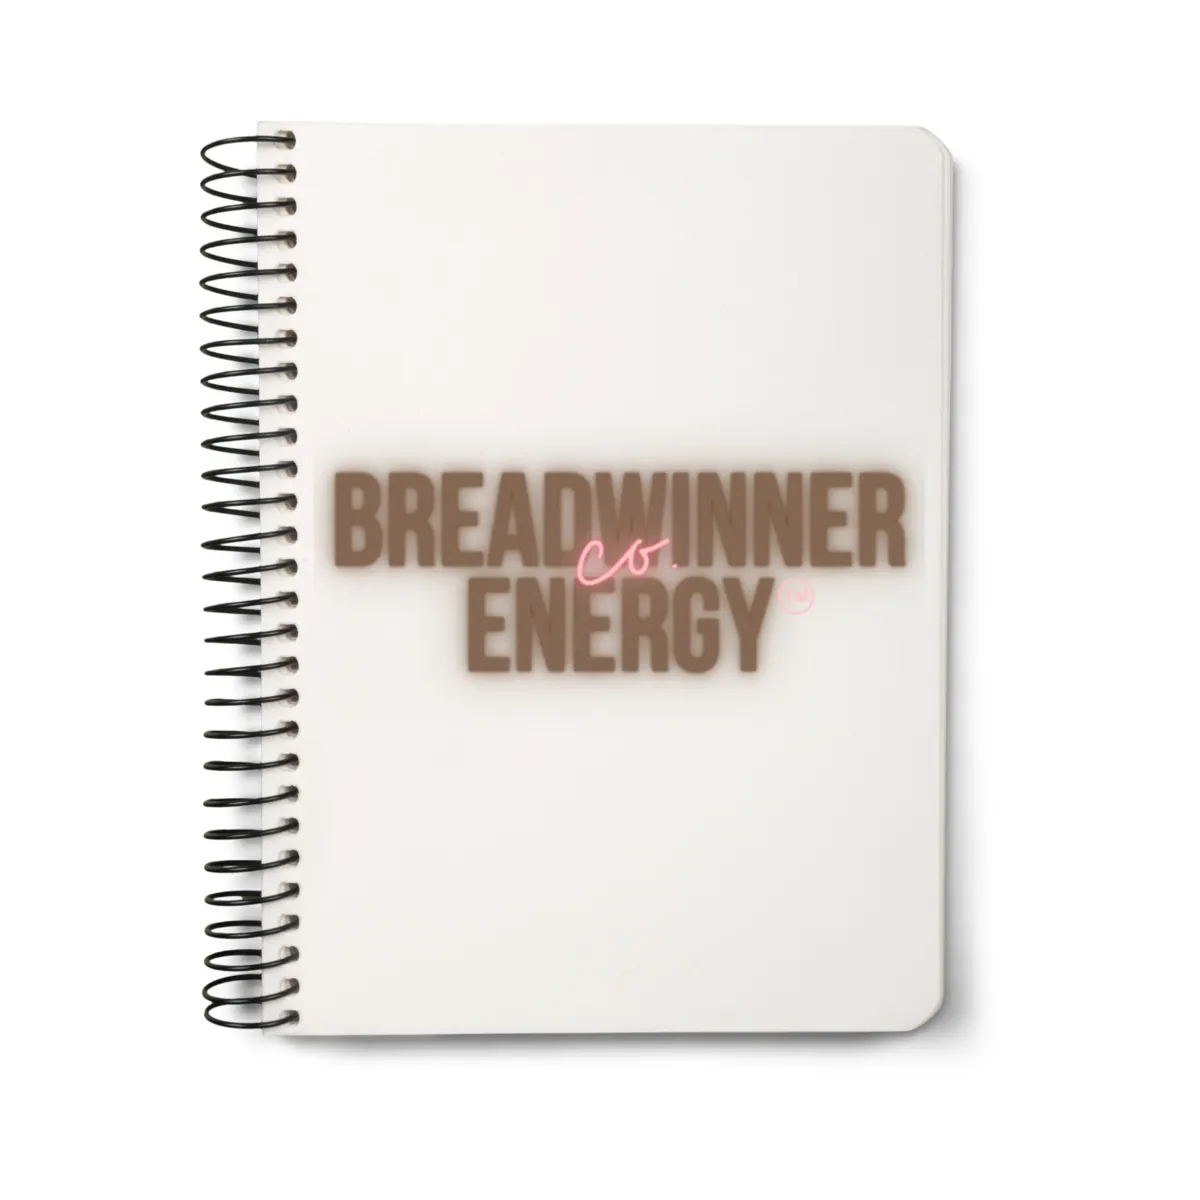 Breadwinner Energy Spiral Small Notebook 